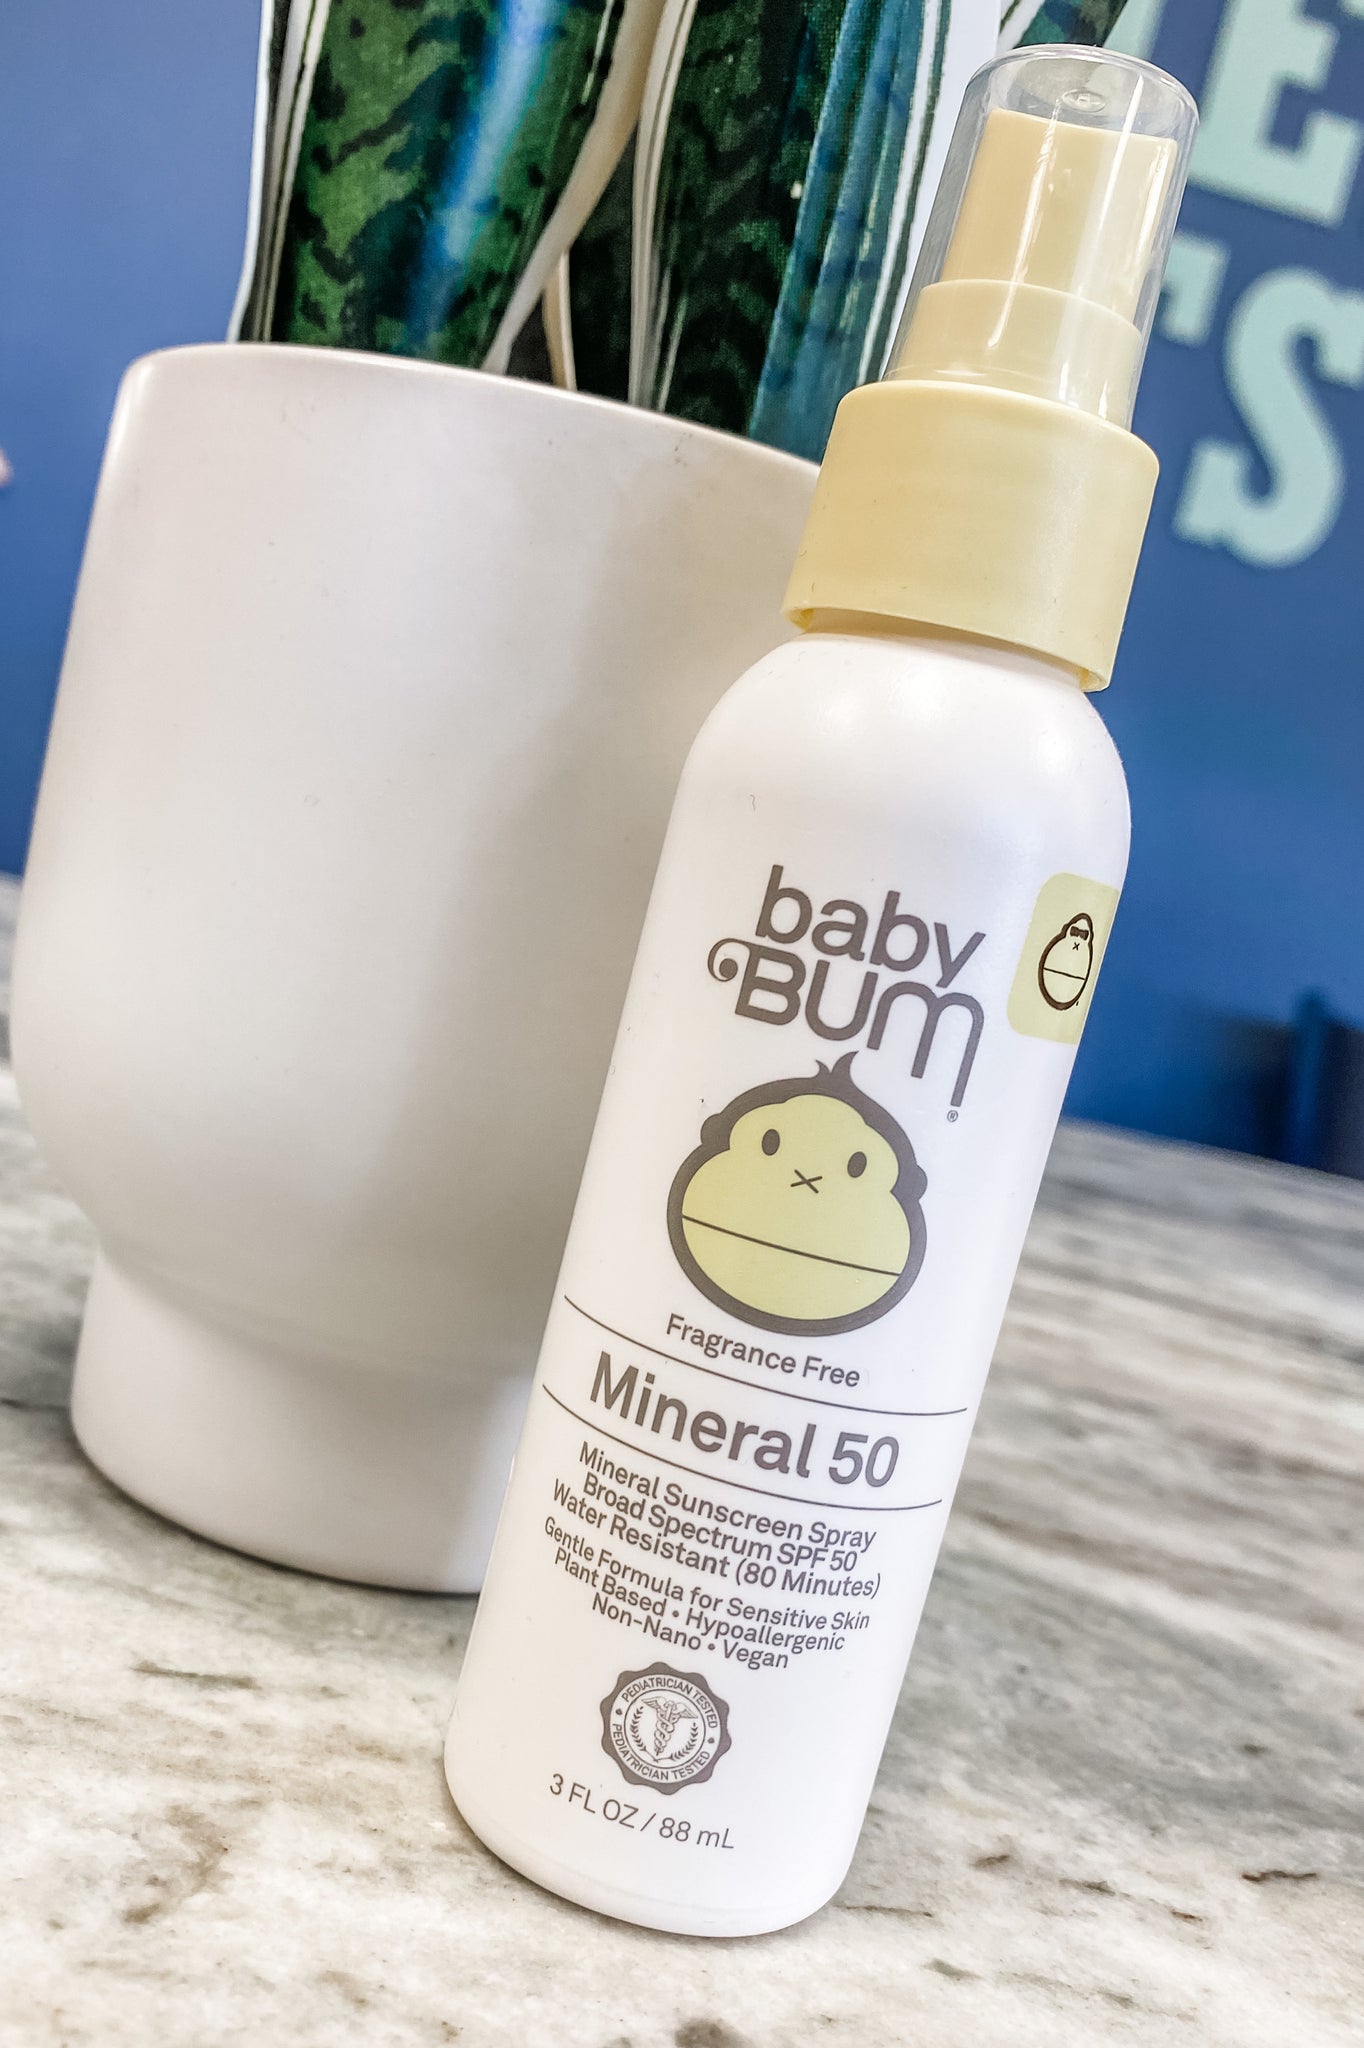 Sun Bum Baby Bum Mineral SPF 50 Sunscreen Spray - Fragrance Free